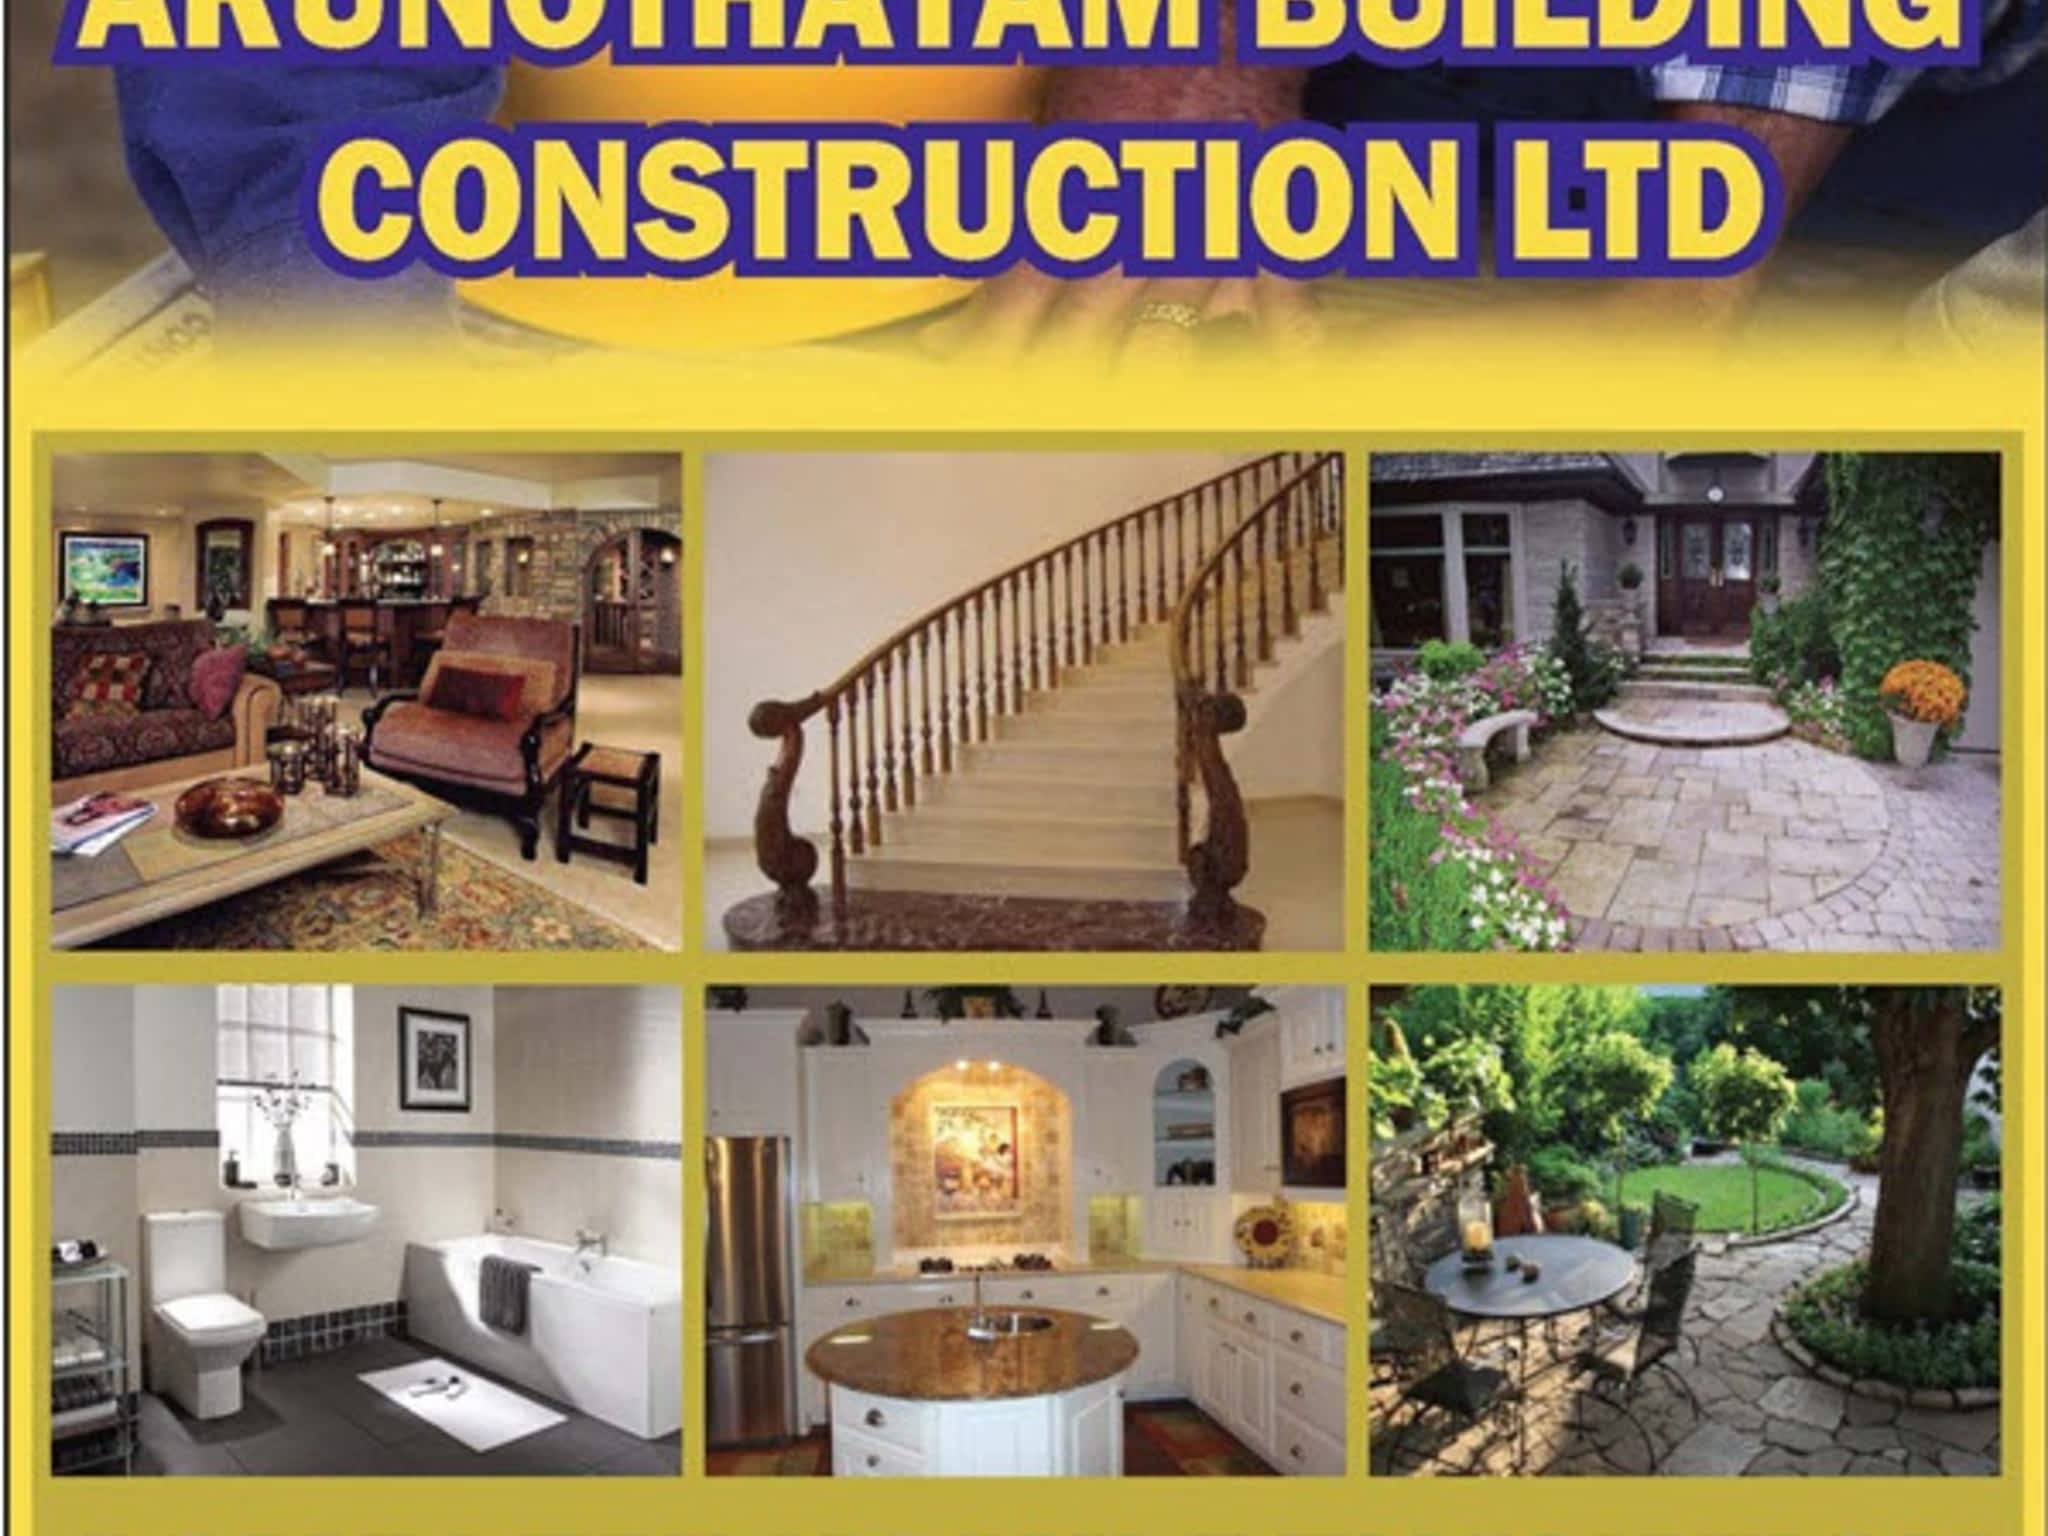 photo Arunothayam Building Construction Ltd